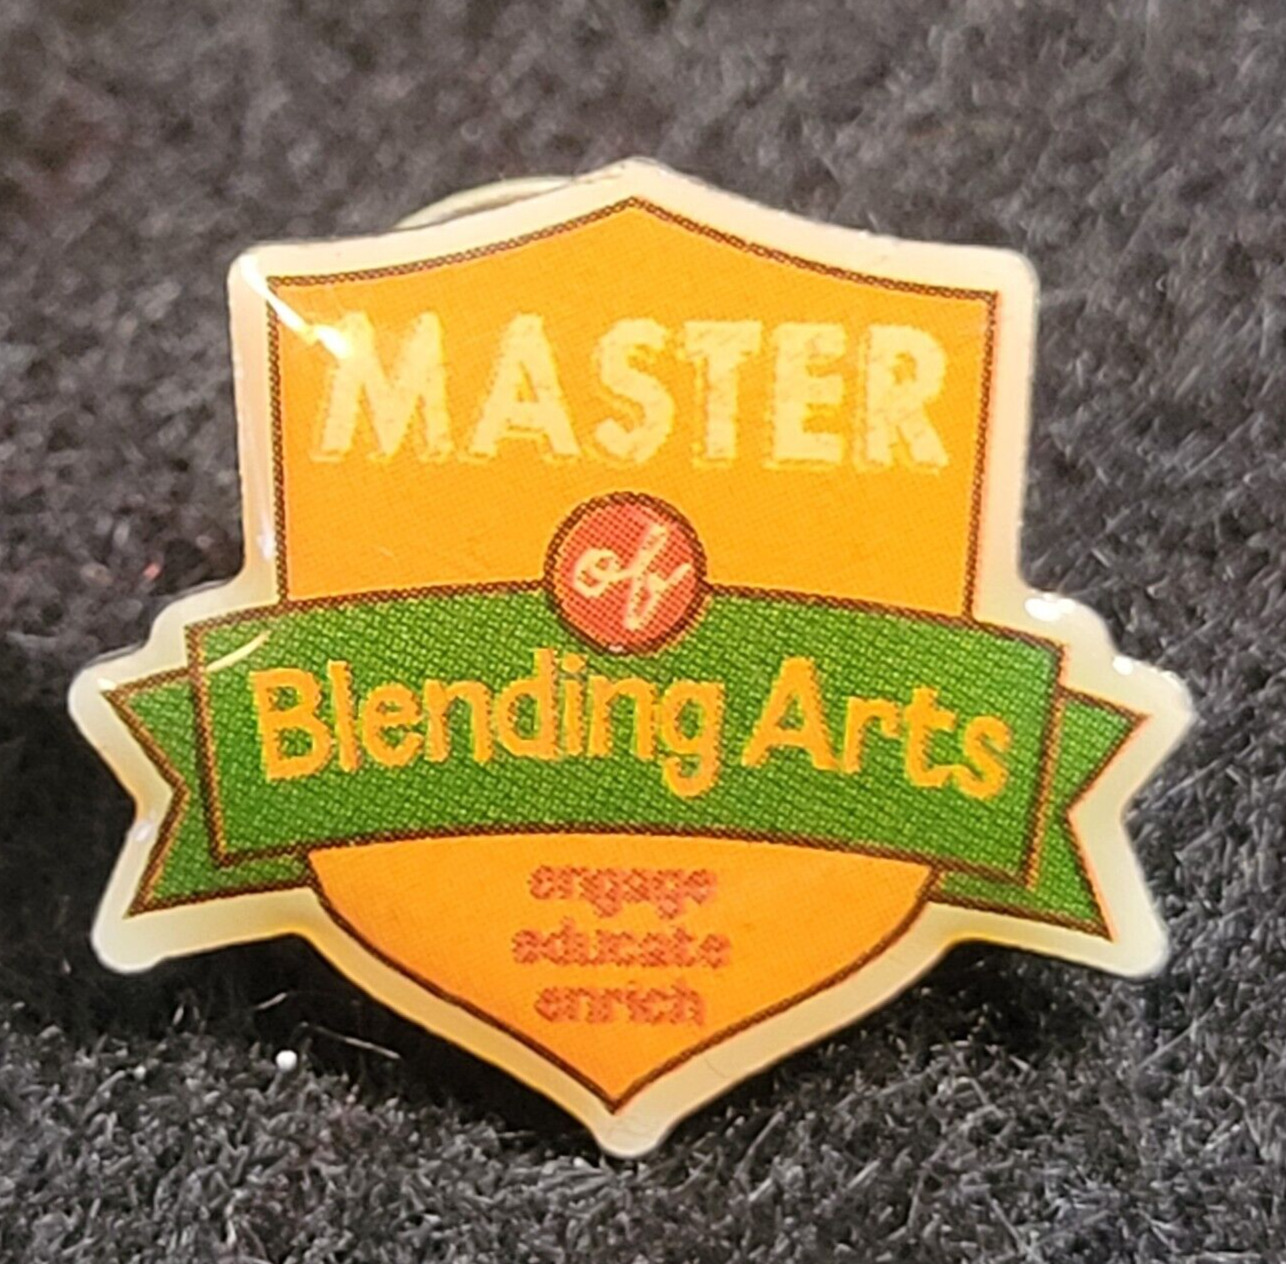 Master of Blending Arts engage educate enrich silver tone Lapel Hat Vest Pin